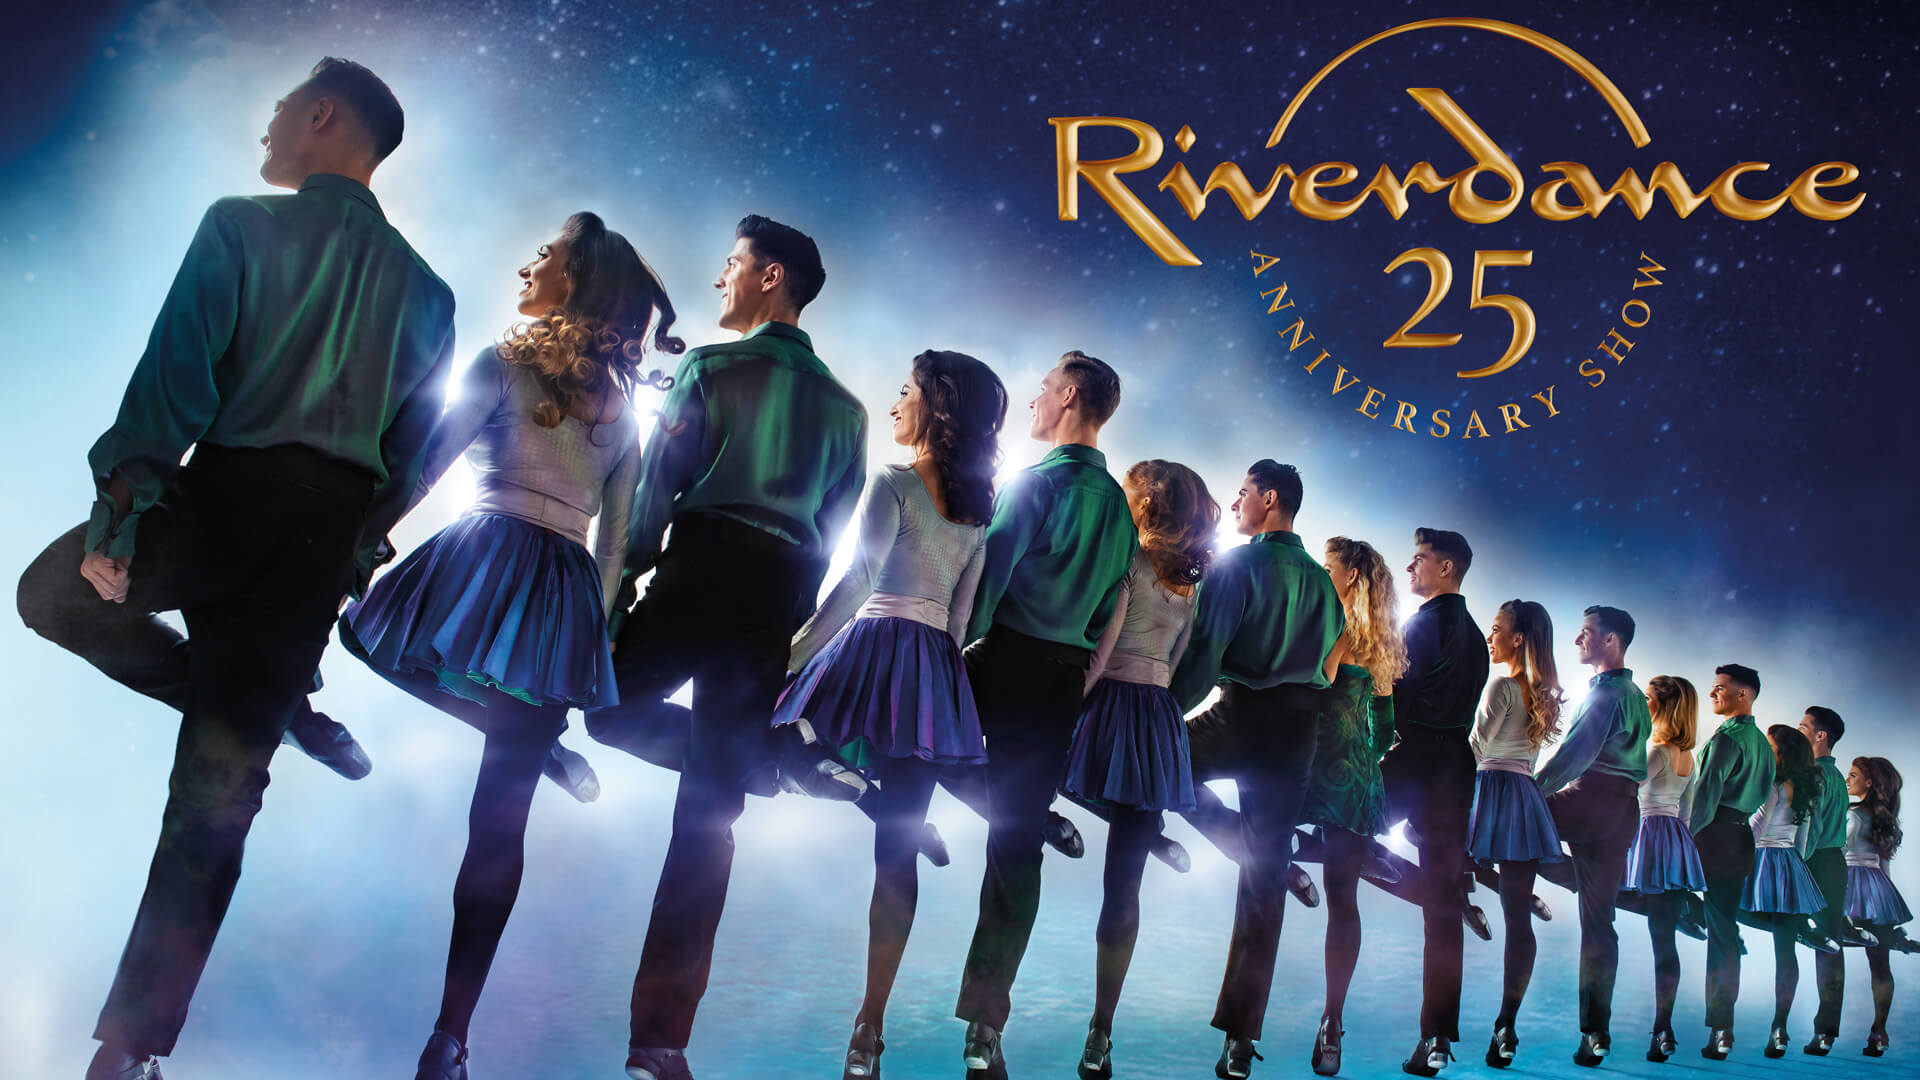 Riverdance 25th Anniversary Tour Comes to Purdue University